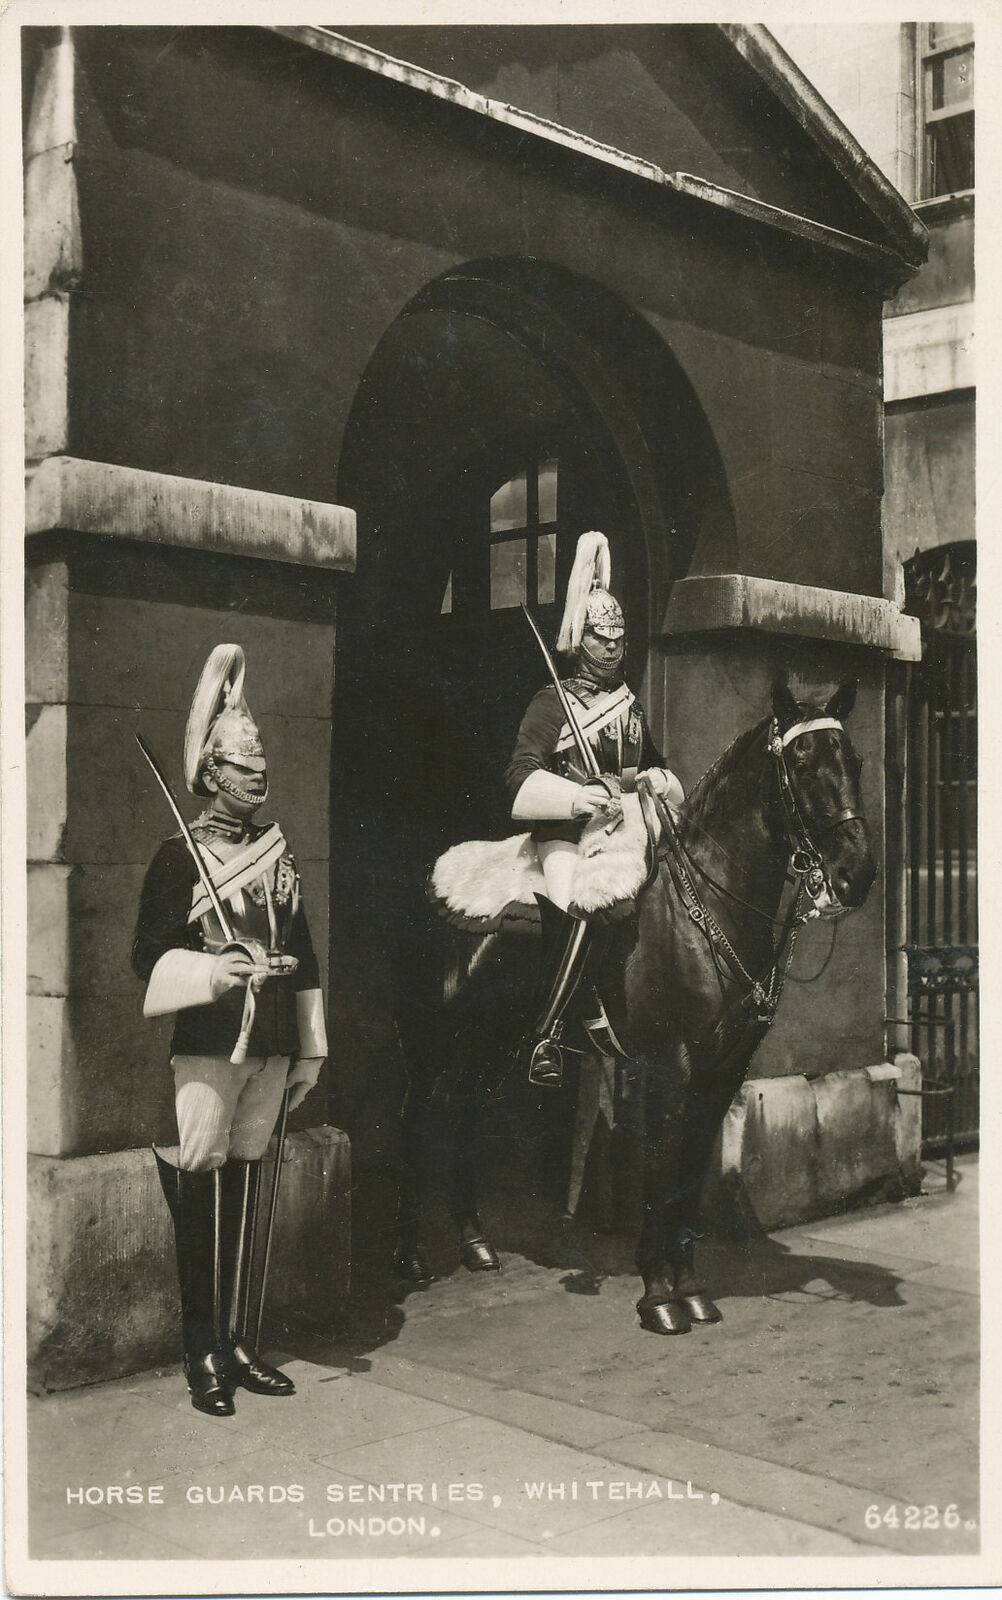 RPPC - Horse Guards Sentries, Whitehall, London - postcard